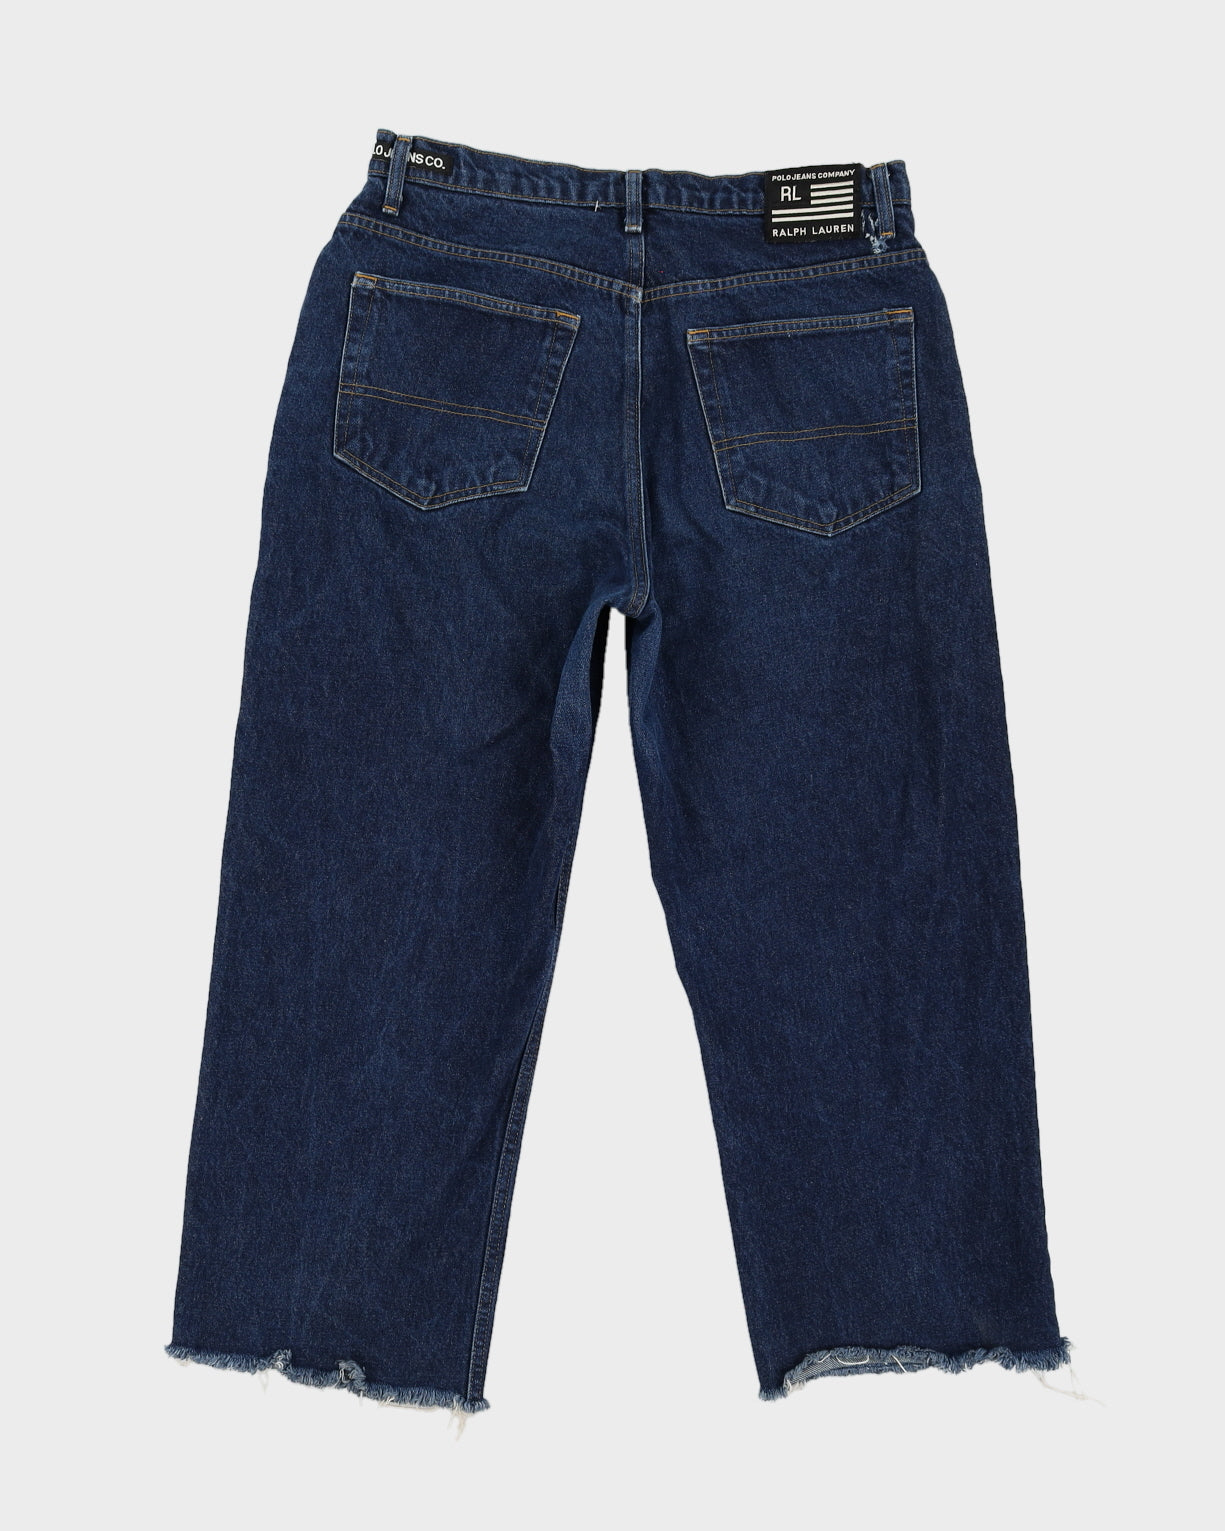 Vintage 90s Polo Jeans Dark Wash Denim Jeans - W36